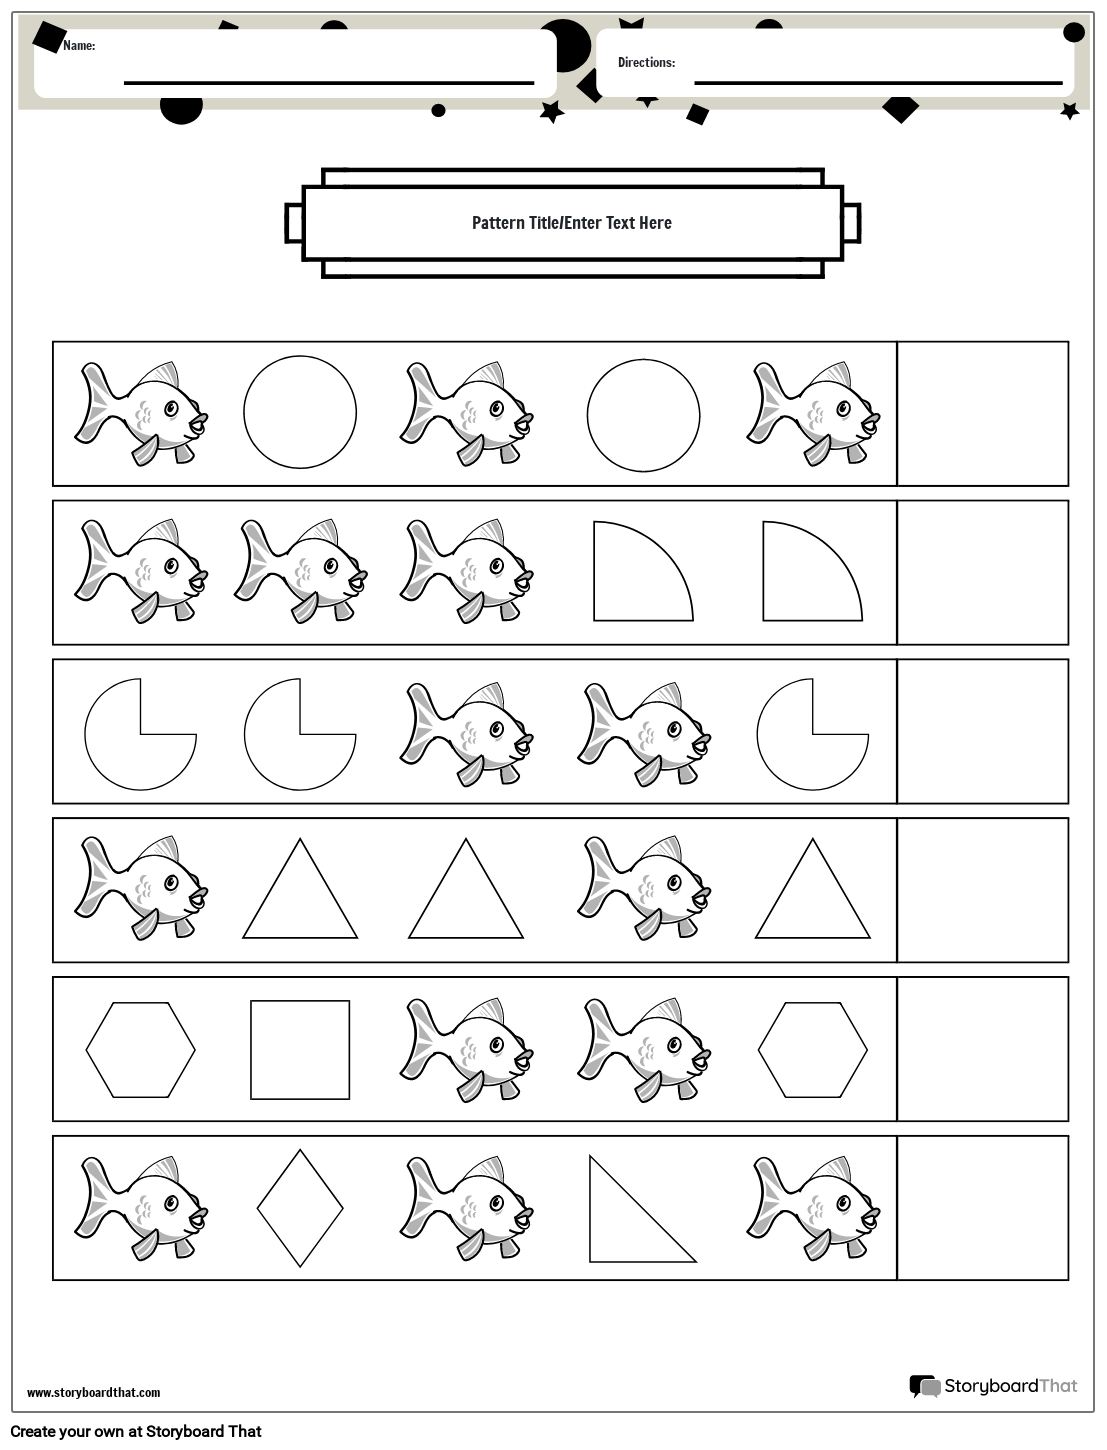 Fishes & shapes pattern worksheet (Black & white)